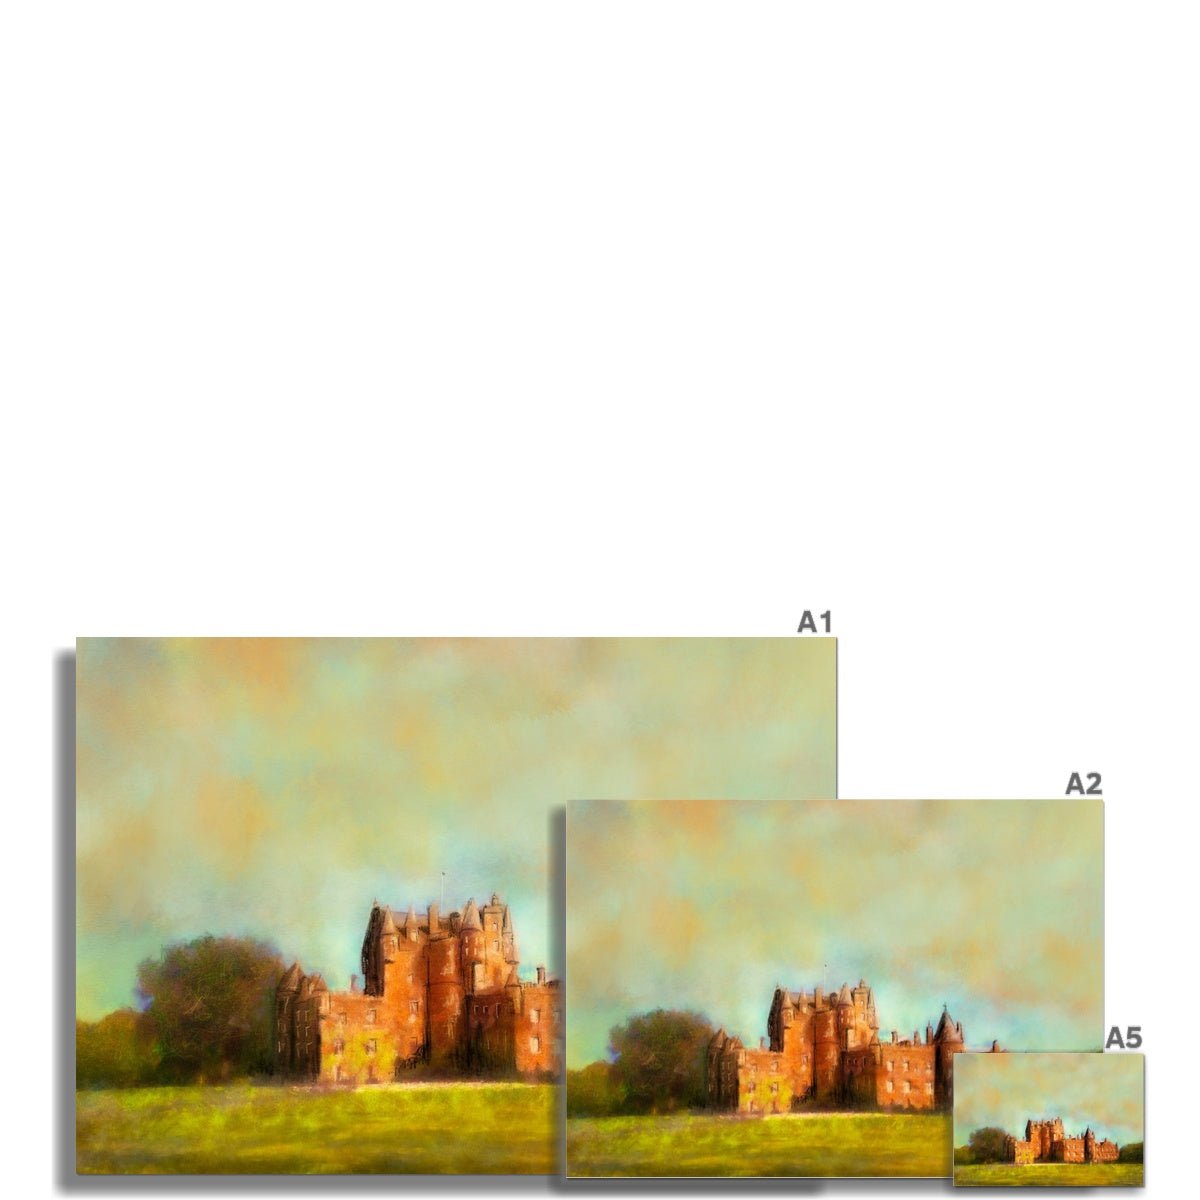 Glamis Castle Painting | Fine Art Prints From Scotland-Unframed Prints-Scottish Castles Art Gallery-Paintings, Prints, Homeware, Art Gifts From Scotland By Scottish Artist Kevin Hunter